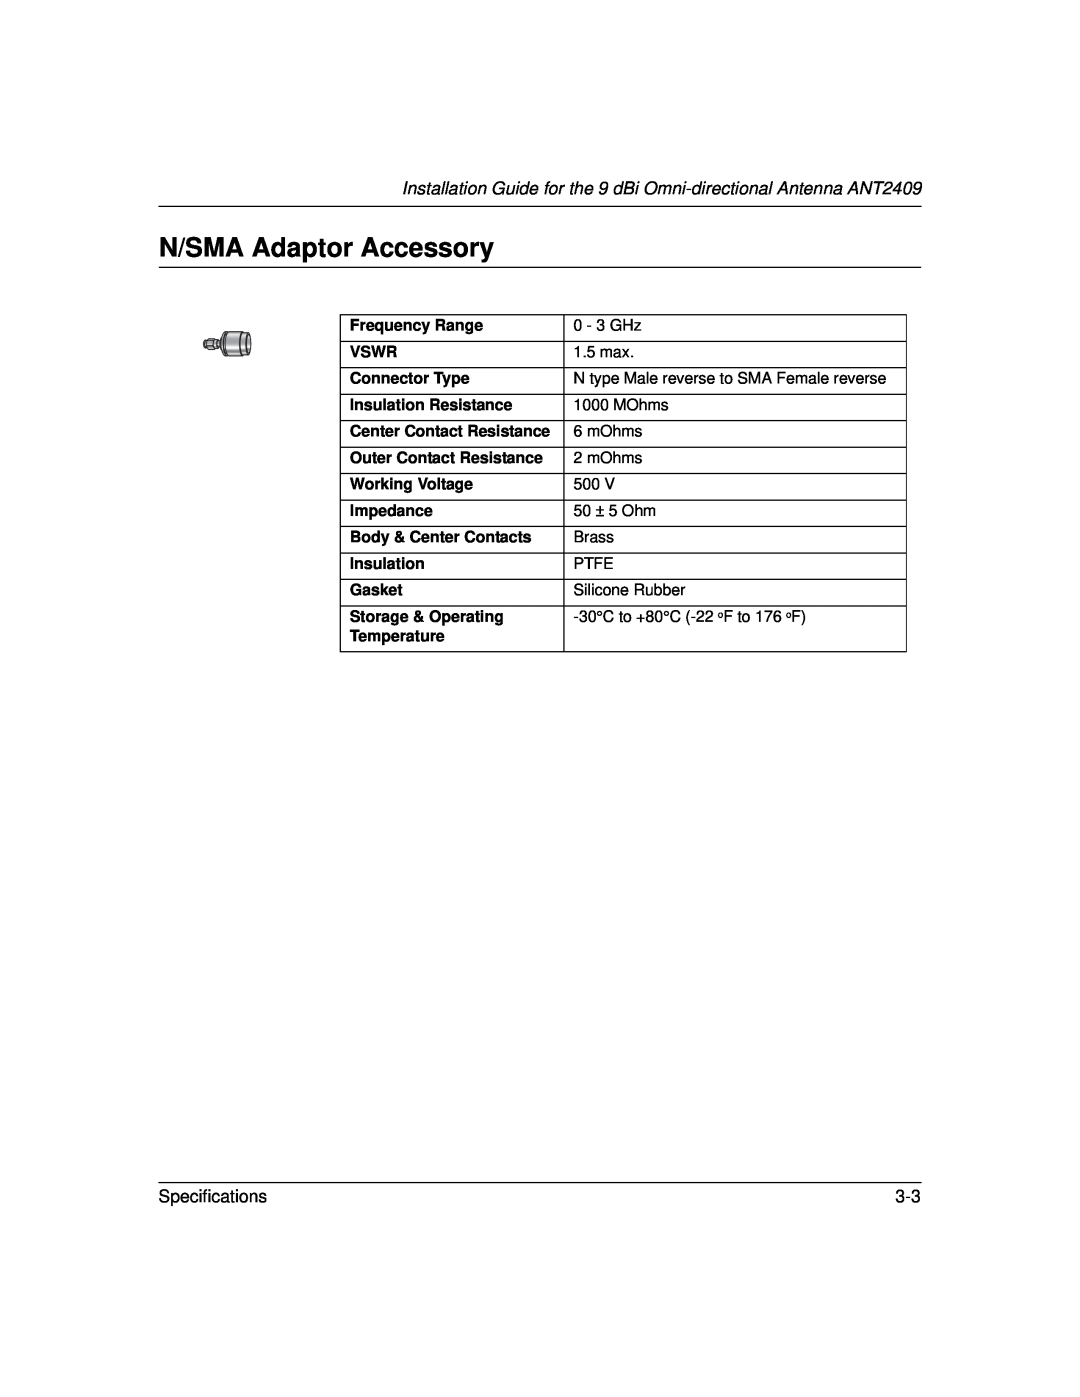 NETGEAR 2409 manual N/SMA Adaptor Accessory, Specifications 